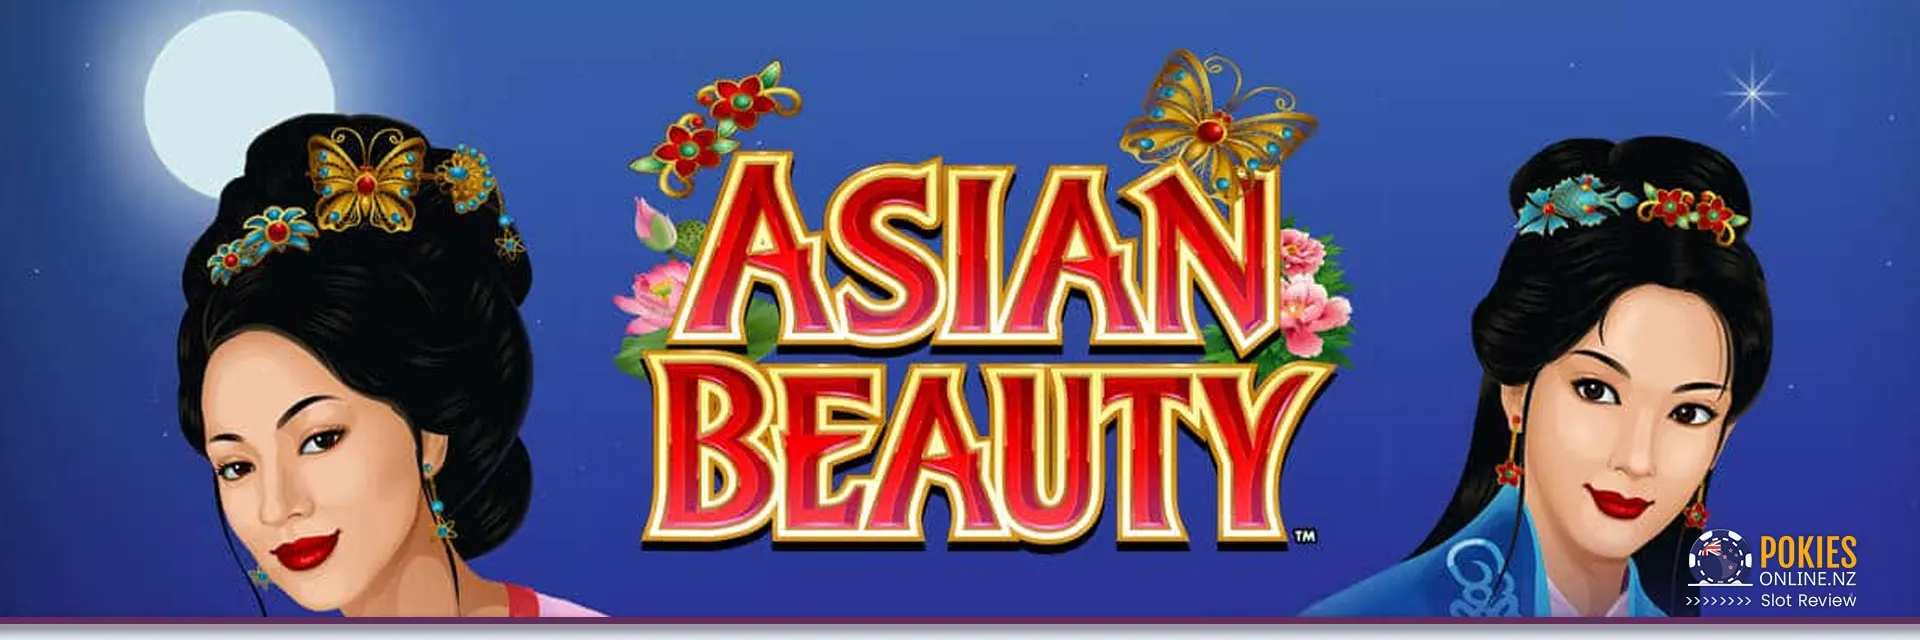 Asian Beauty slot Banner